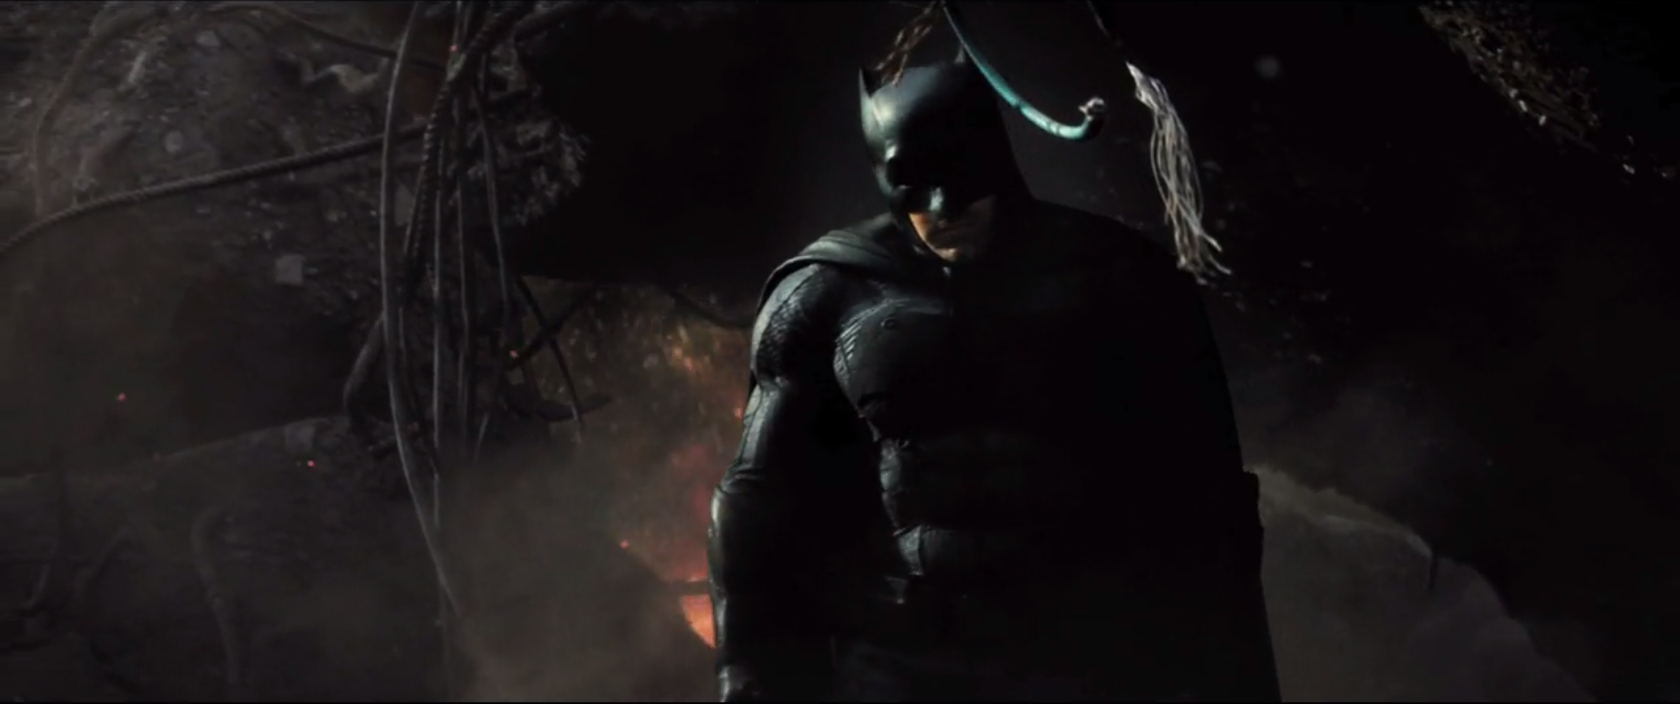 Batman v Superman: Dawn of Justice Rewind Theater